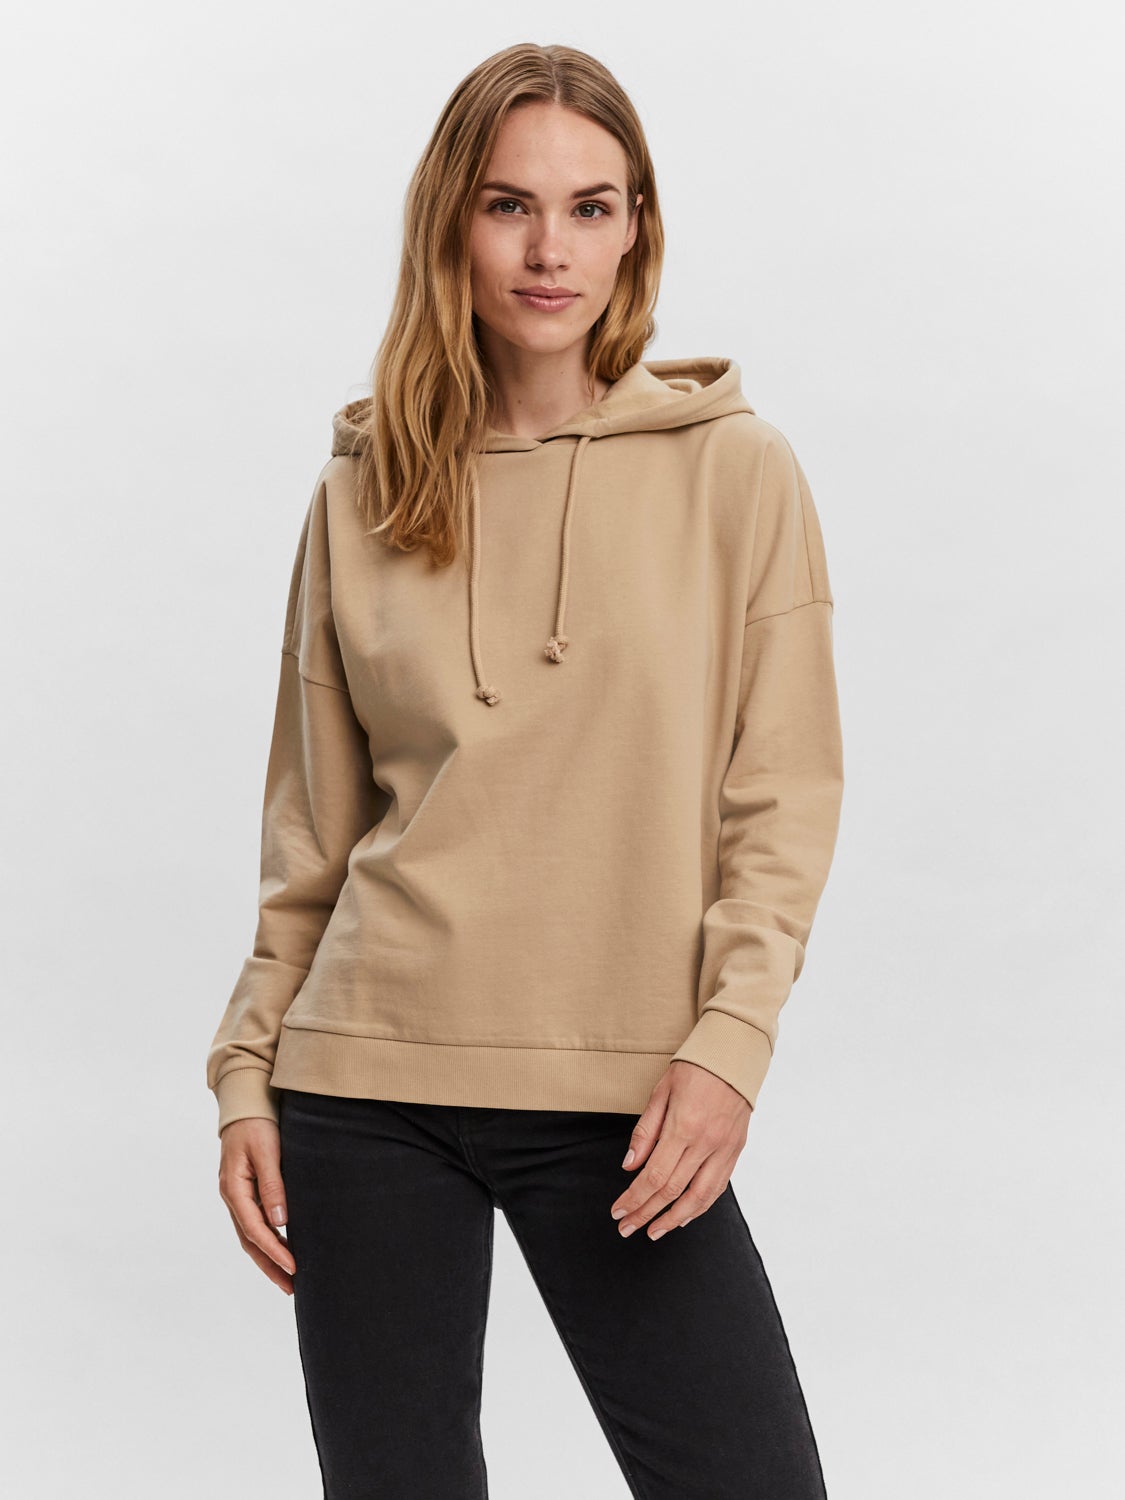 Vero Moda Sweatshirt braun Casual-Look Mode Sweats Sweatshirts 